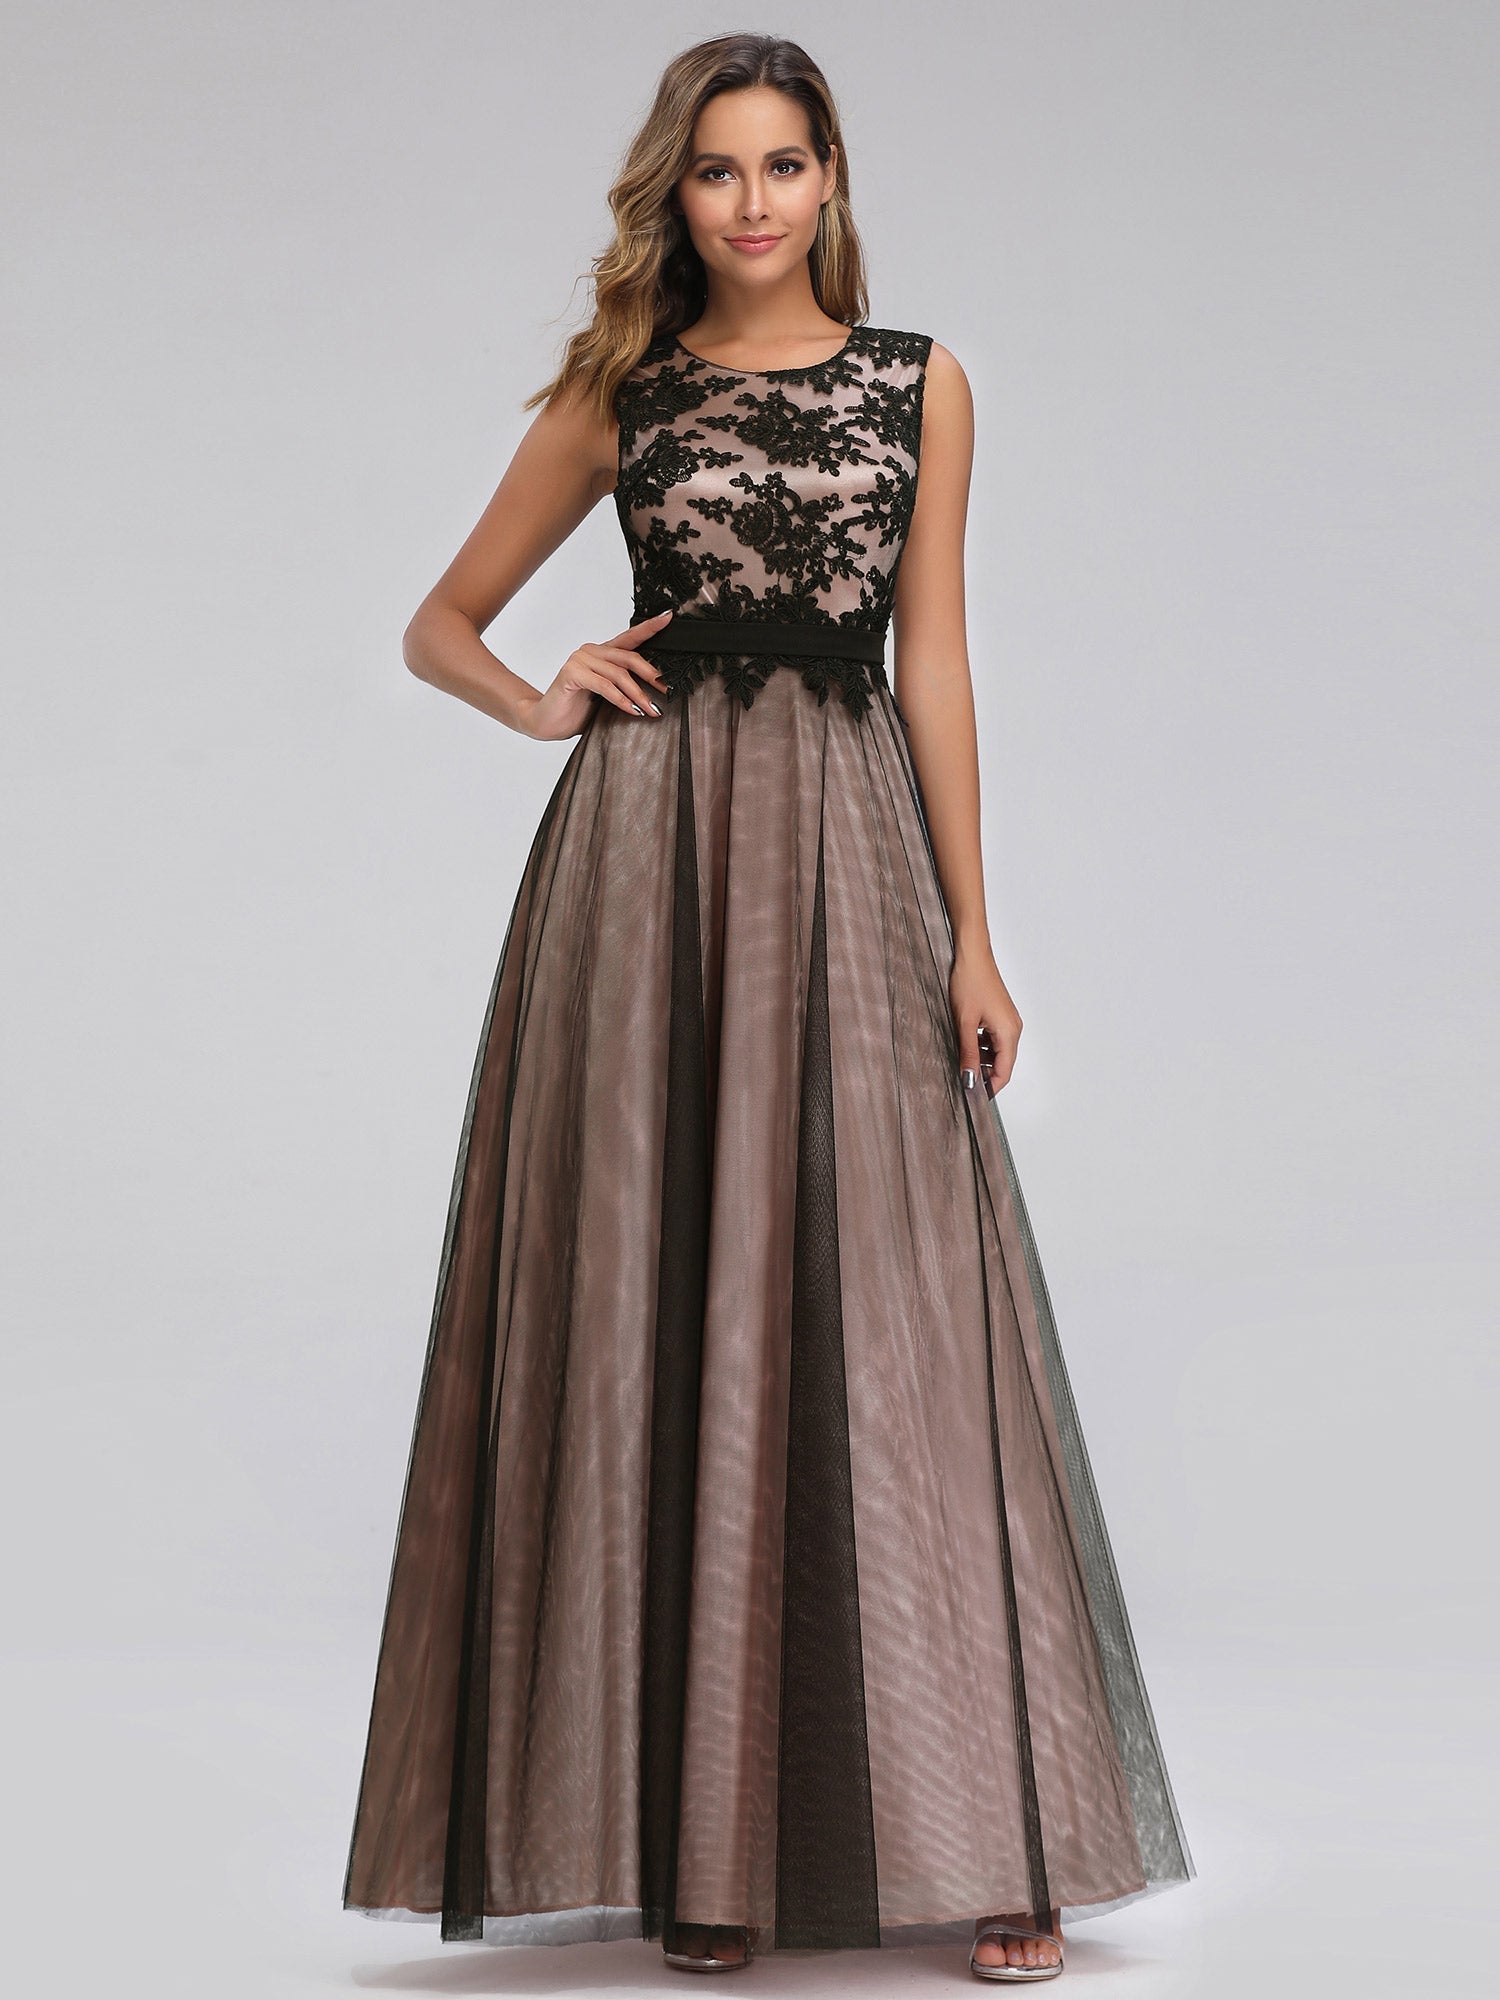 Elegant Black Brocade Evening Dress with Sheer Overlay